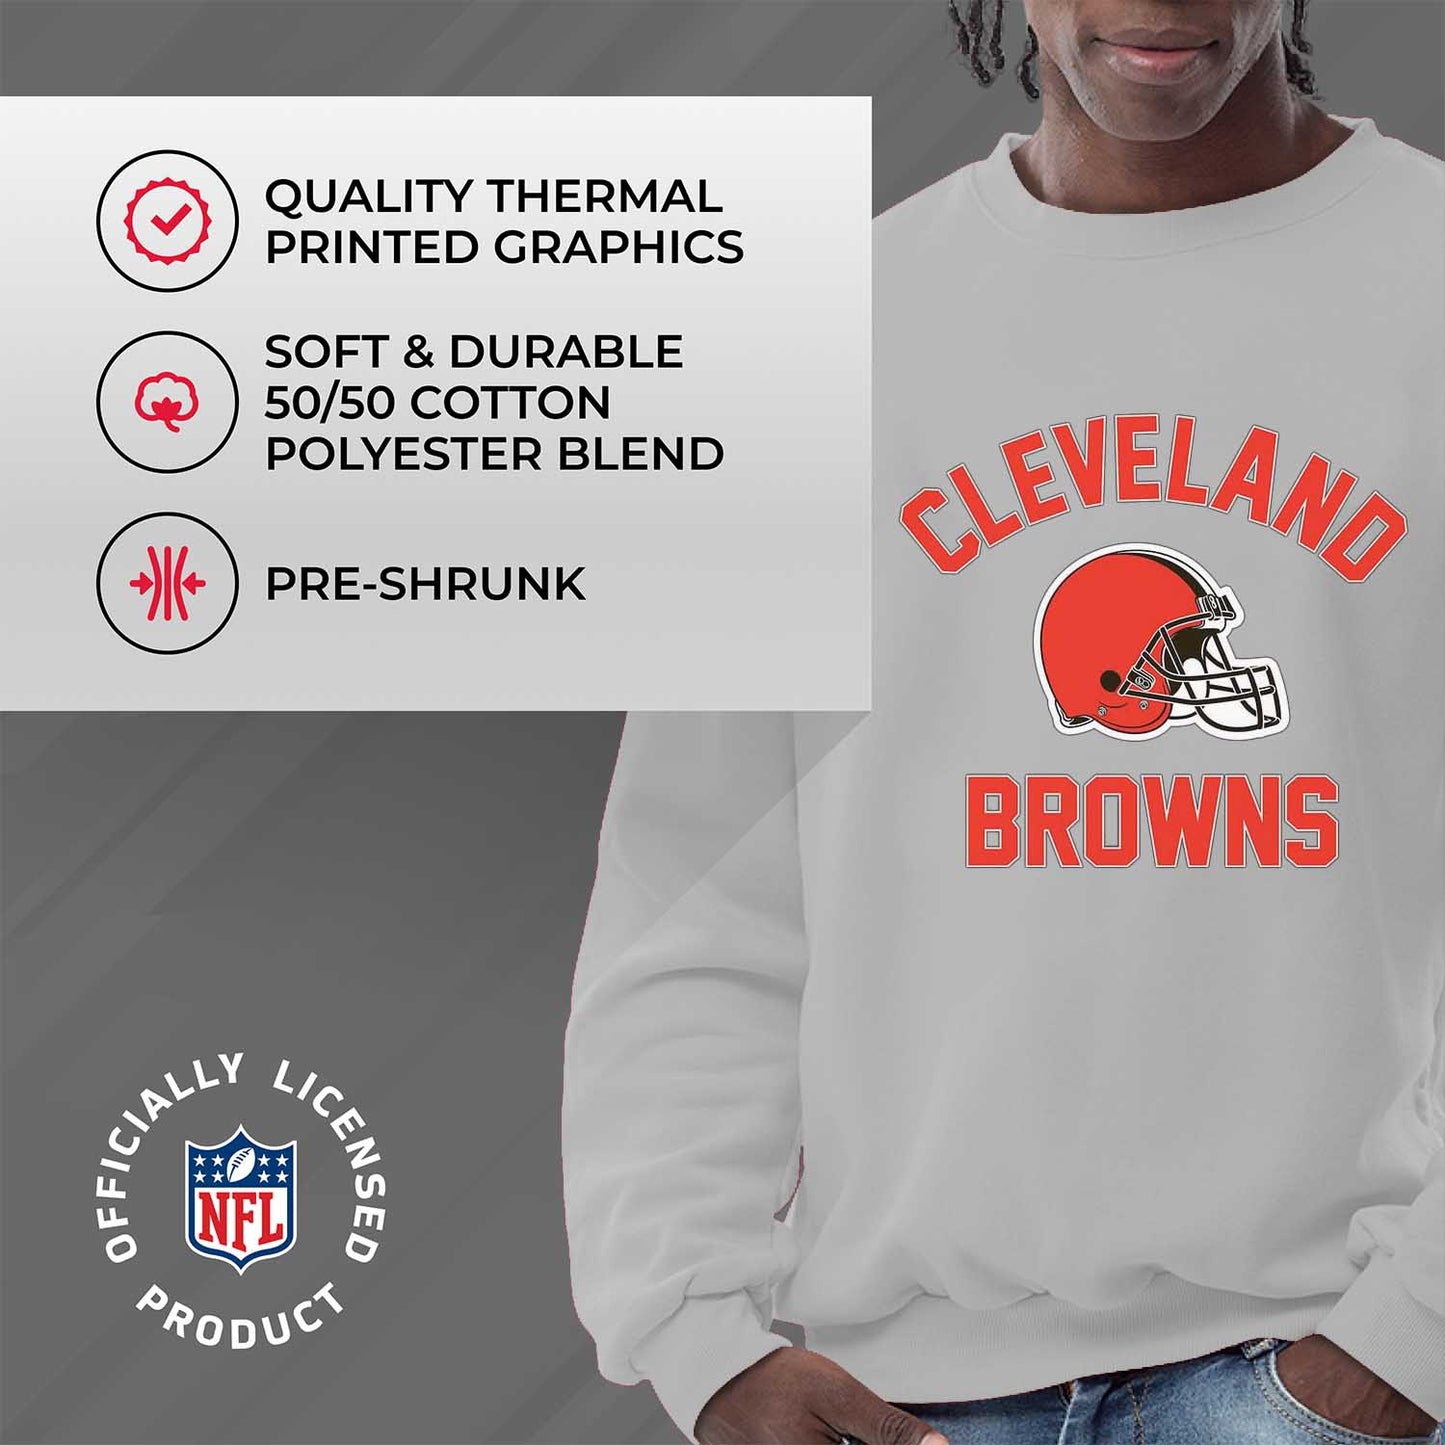 Cleveland Browns NFL Adult Gameday Football Crewneck Sweatshirt - Sport Gray